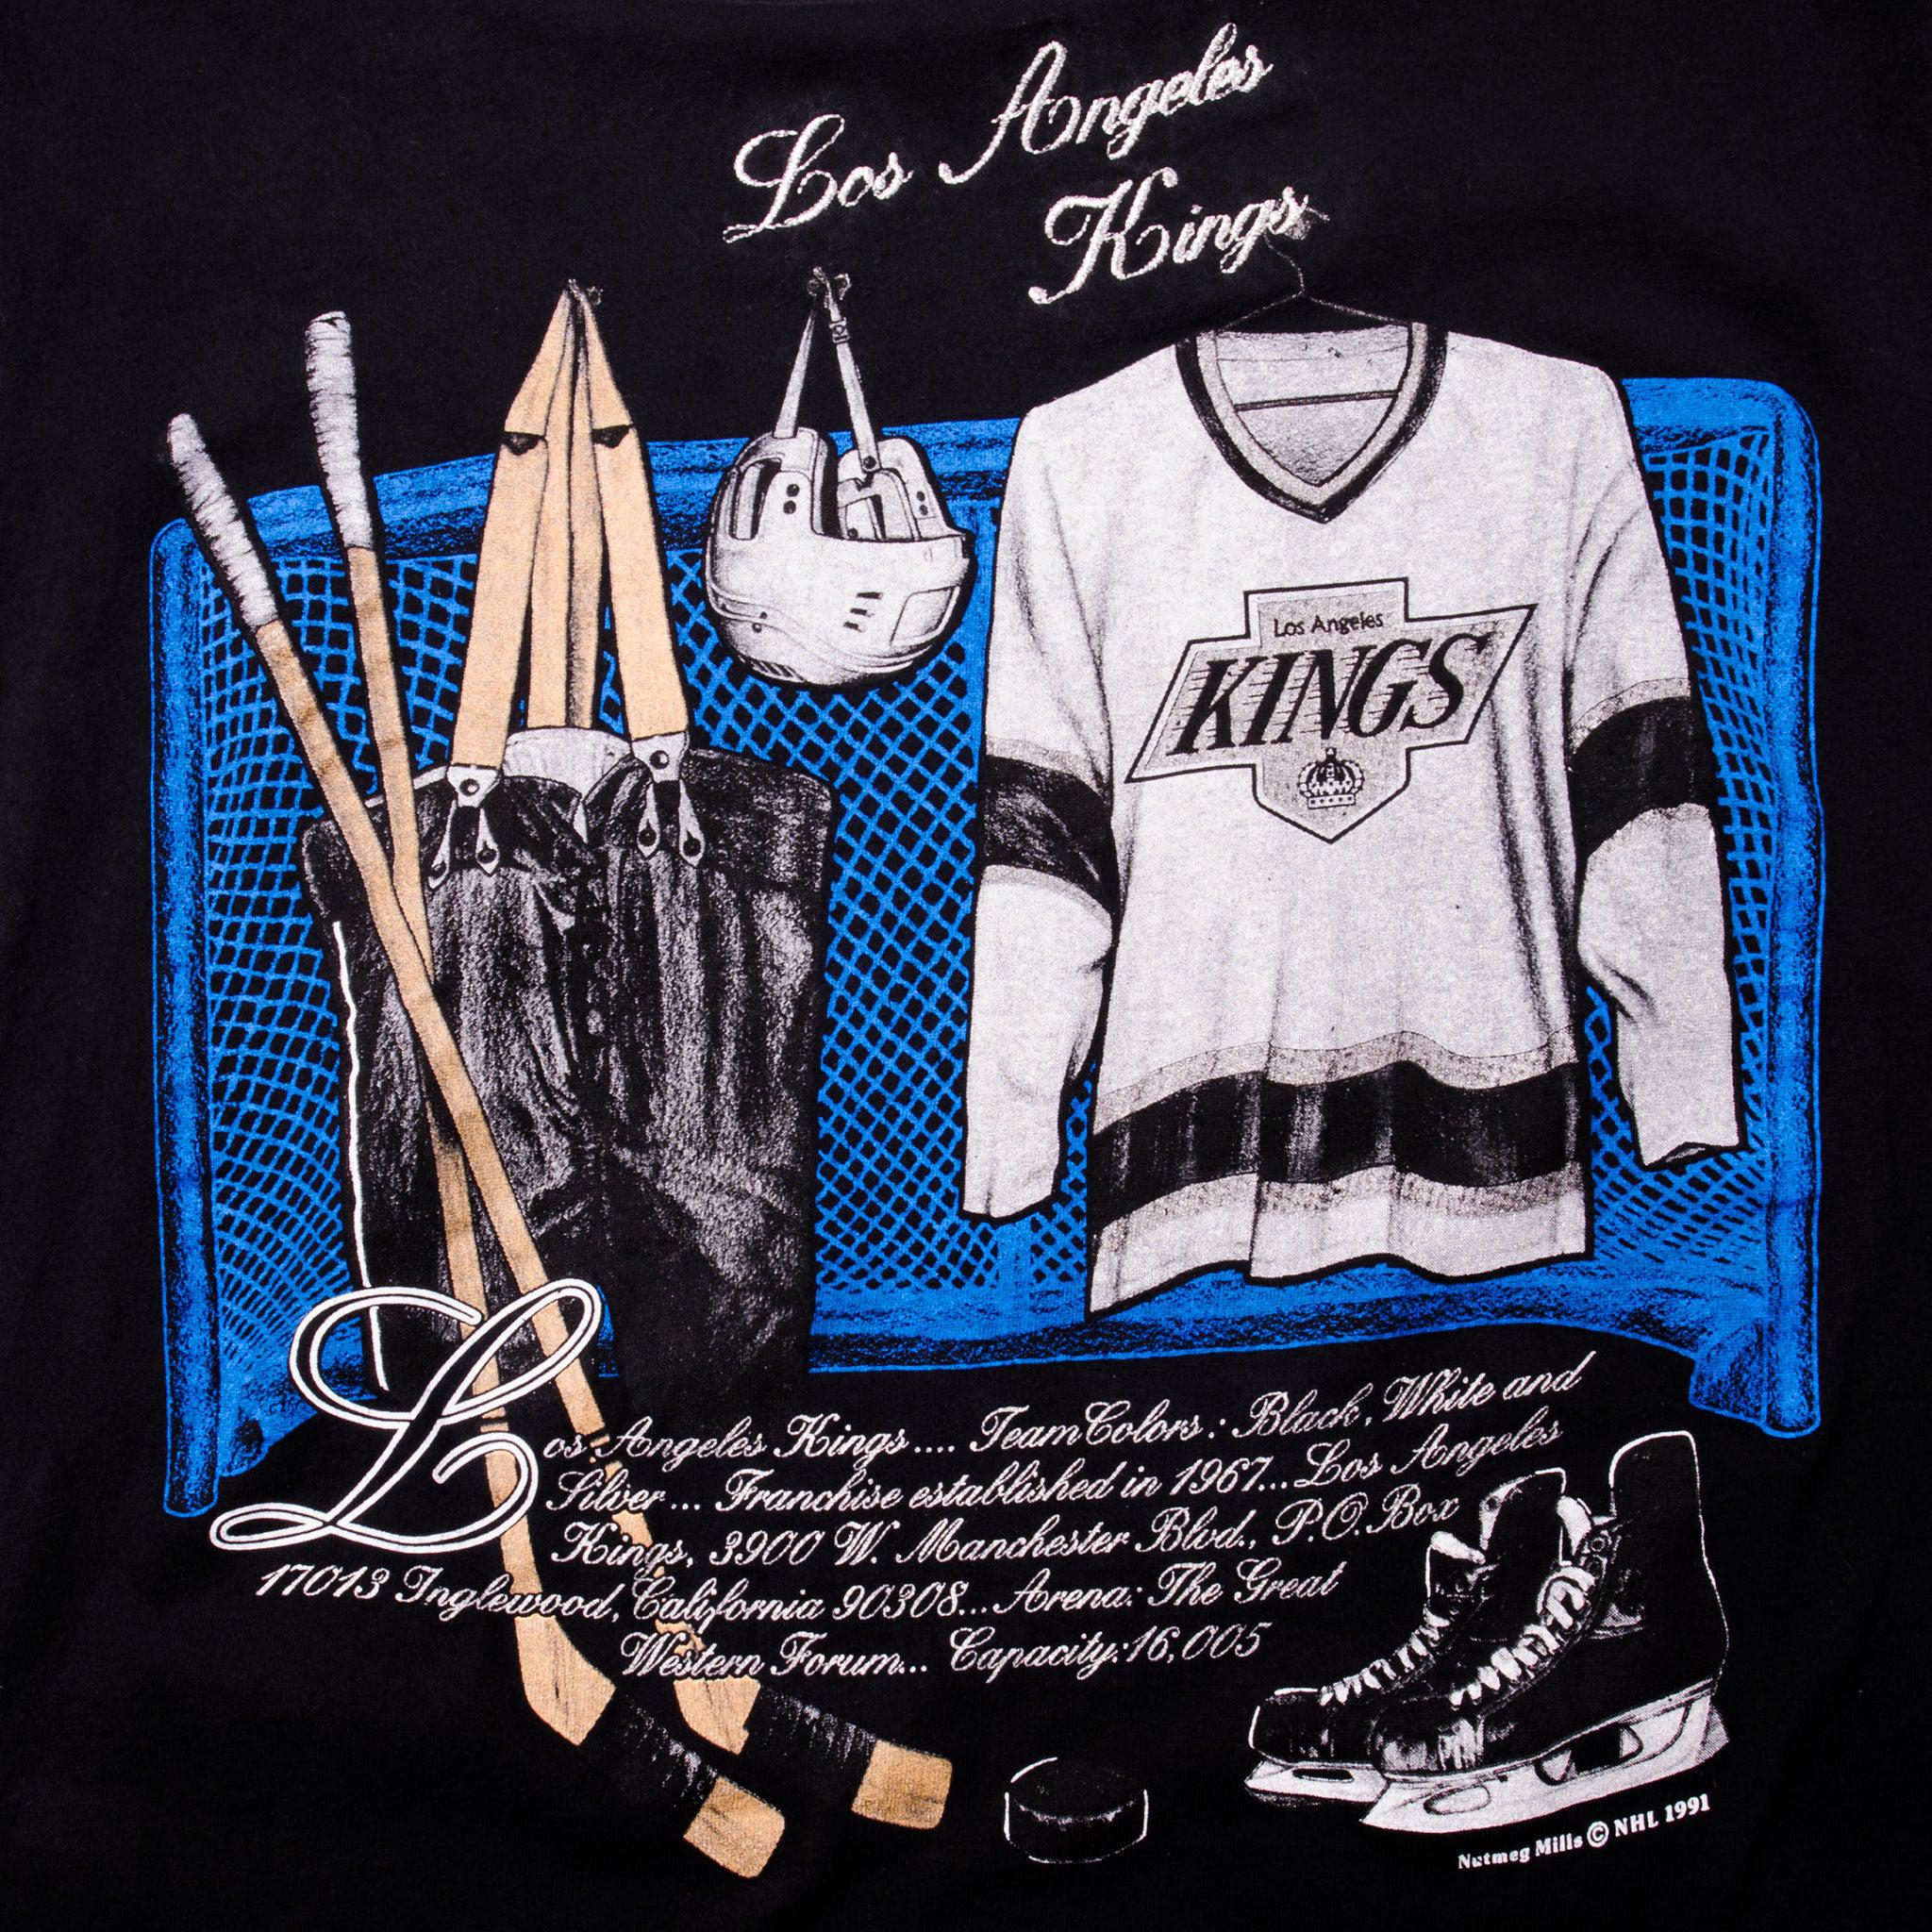 RARE Vintage Champion Apparel Reverse Weave LA Kings Hoodie NHL Sweatshirt L